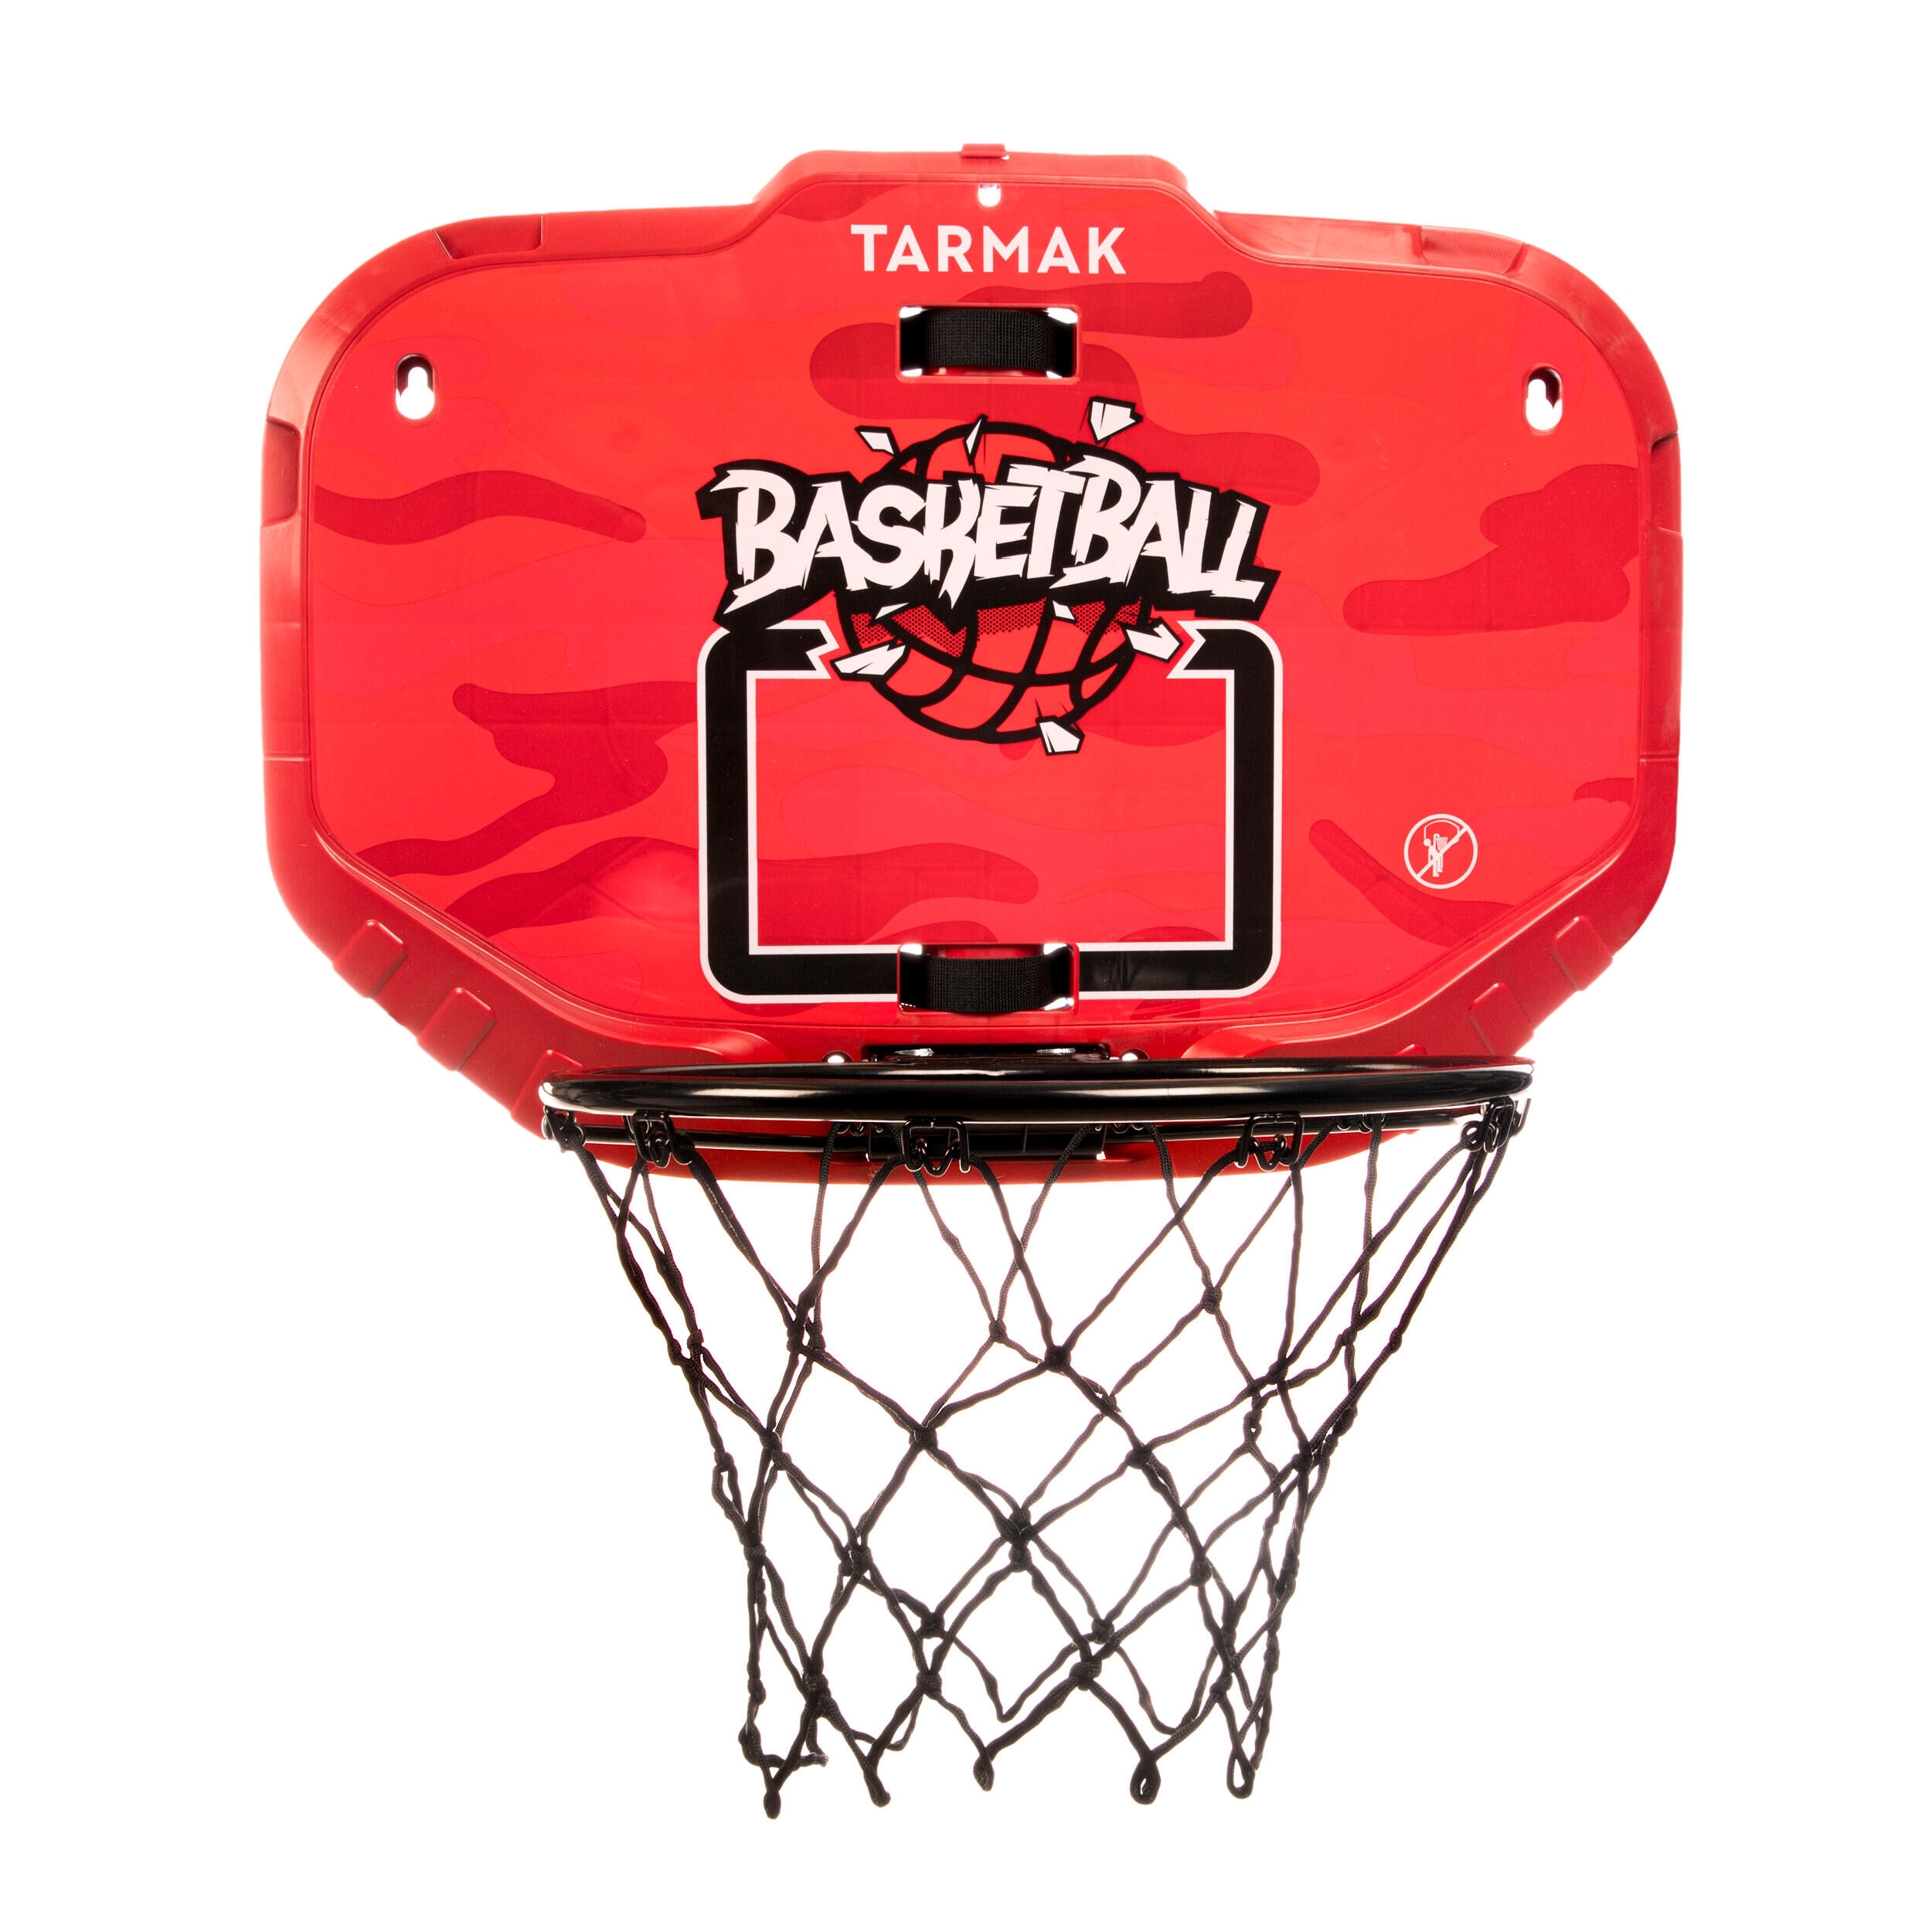 TARMAK Wall-Mounted Transportable Basketball Hoop Set K900 - Red/Black